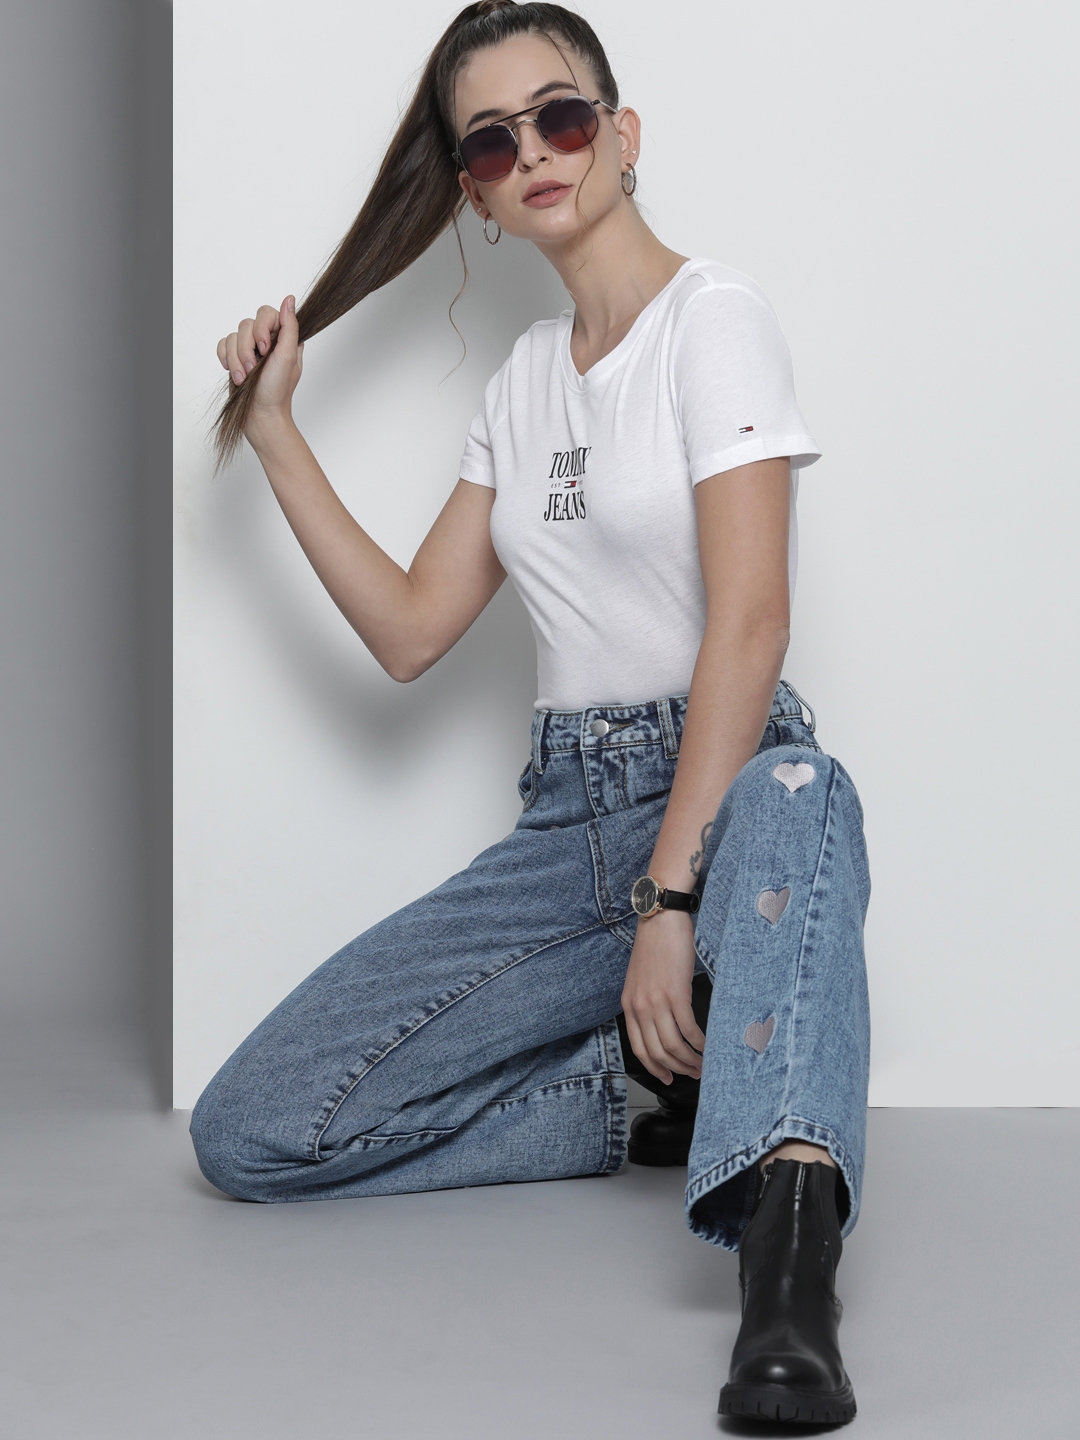 Buy Tommy Hilfiger Women White Brand Logo Printed Slim Fit T Shirt